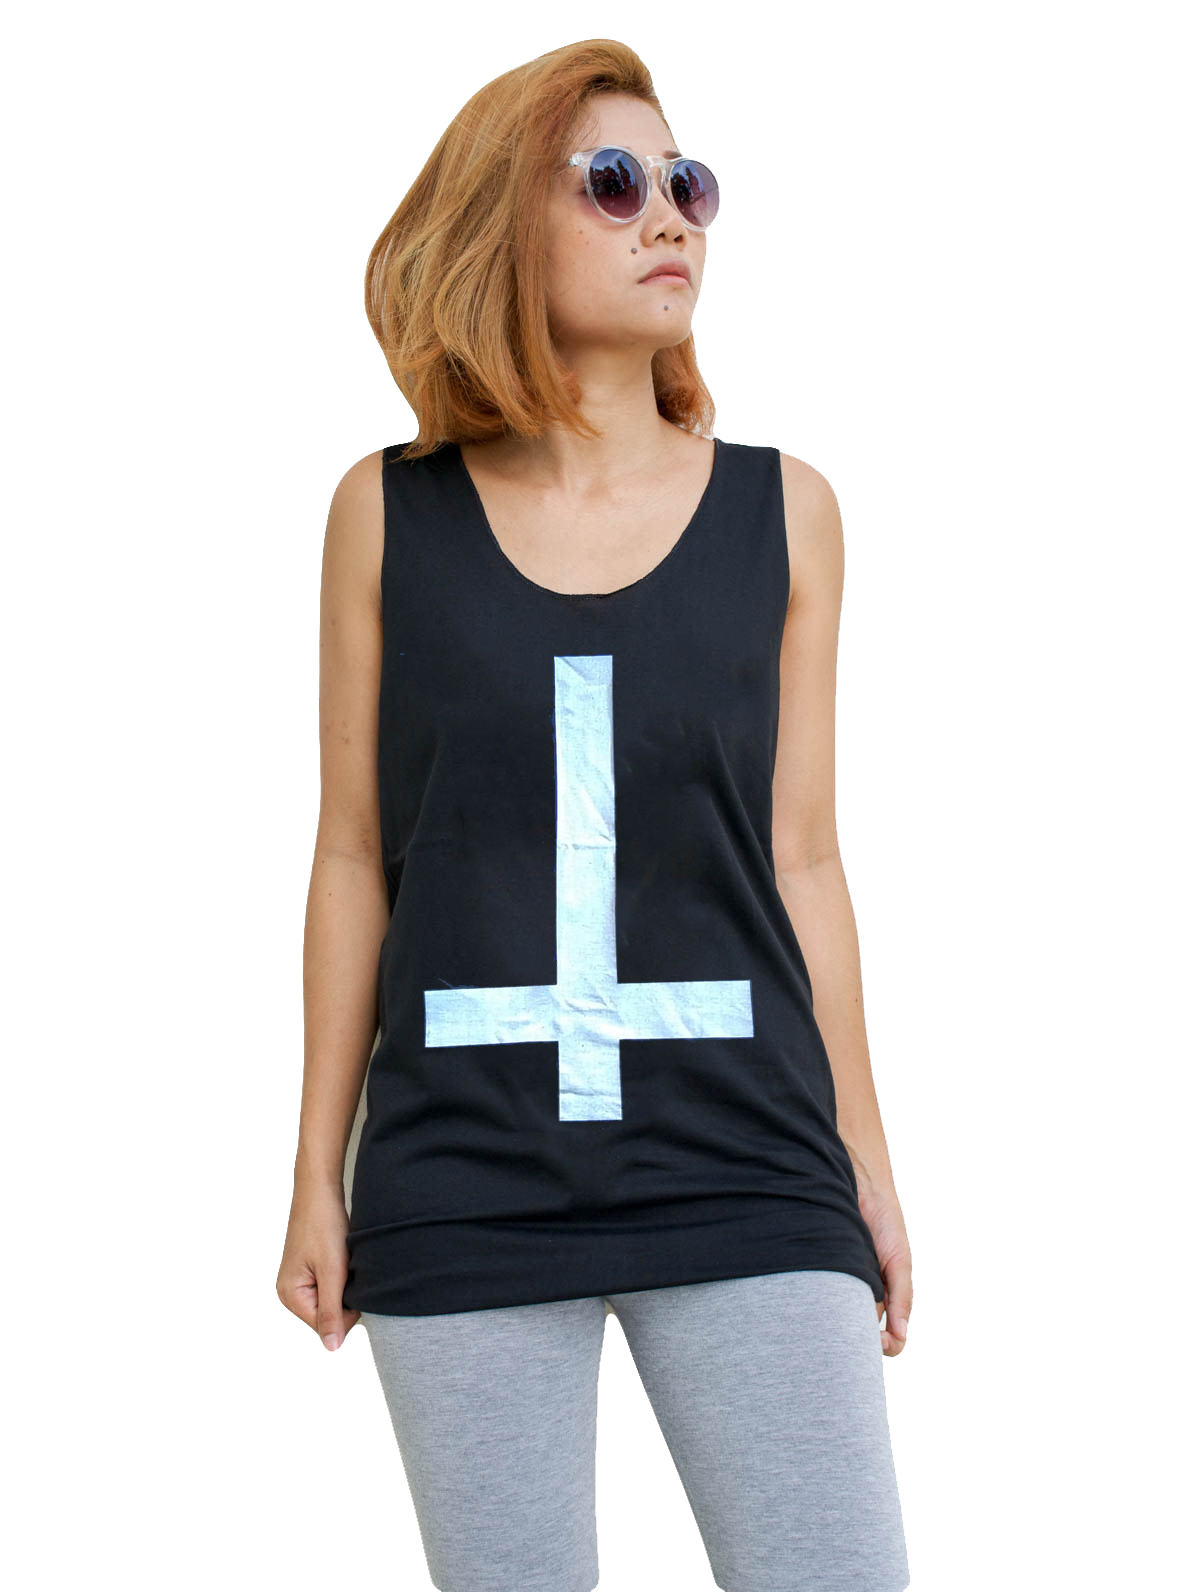 Unisex Inverted Cross Satan Tank-Top Singlet vest Sleeveless T-shirt